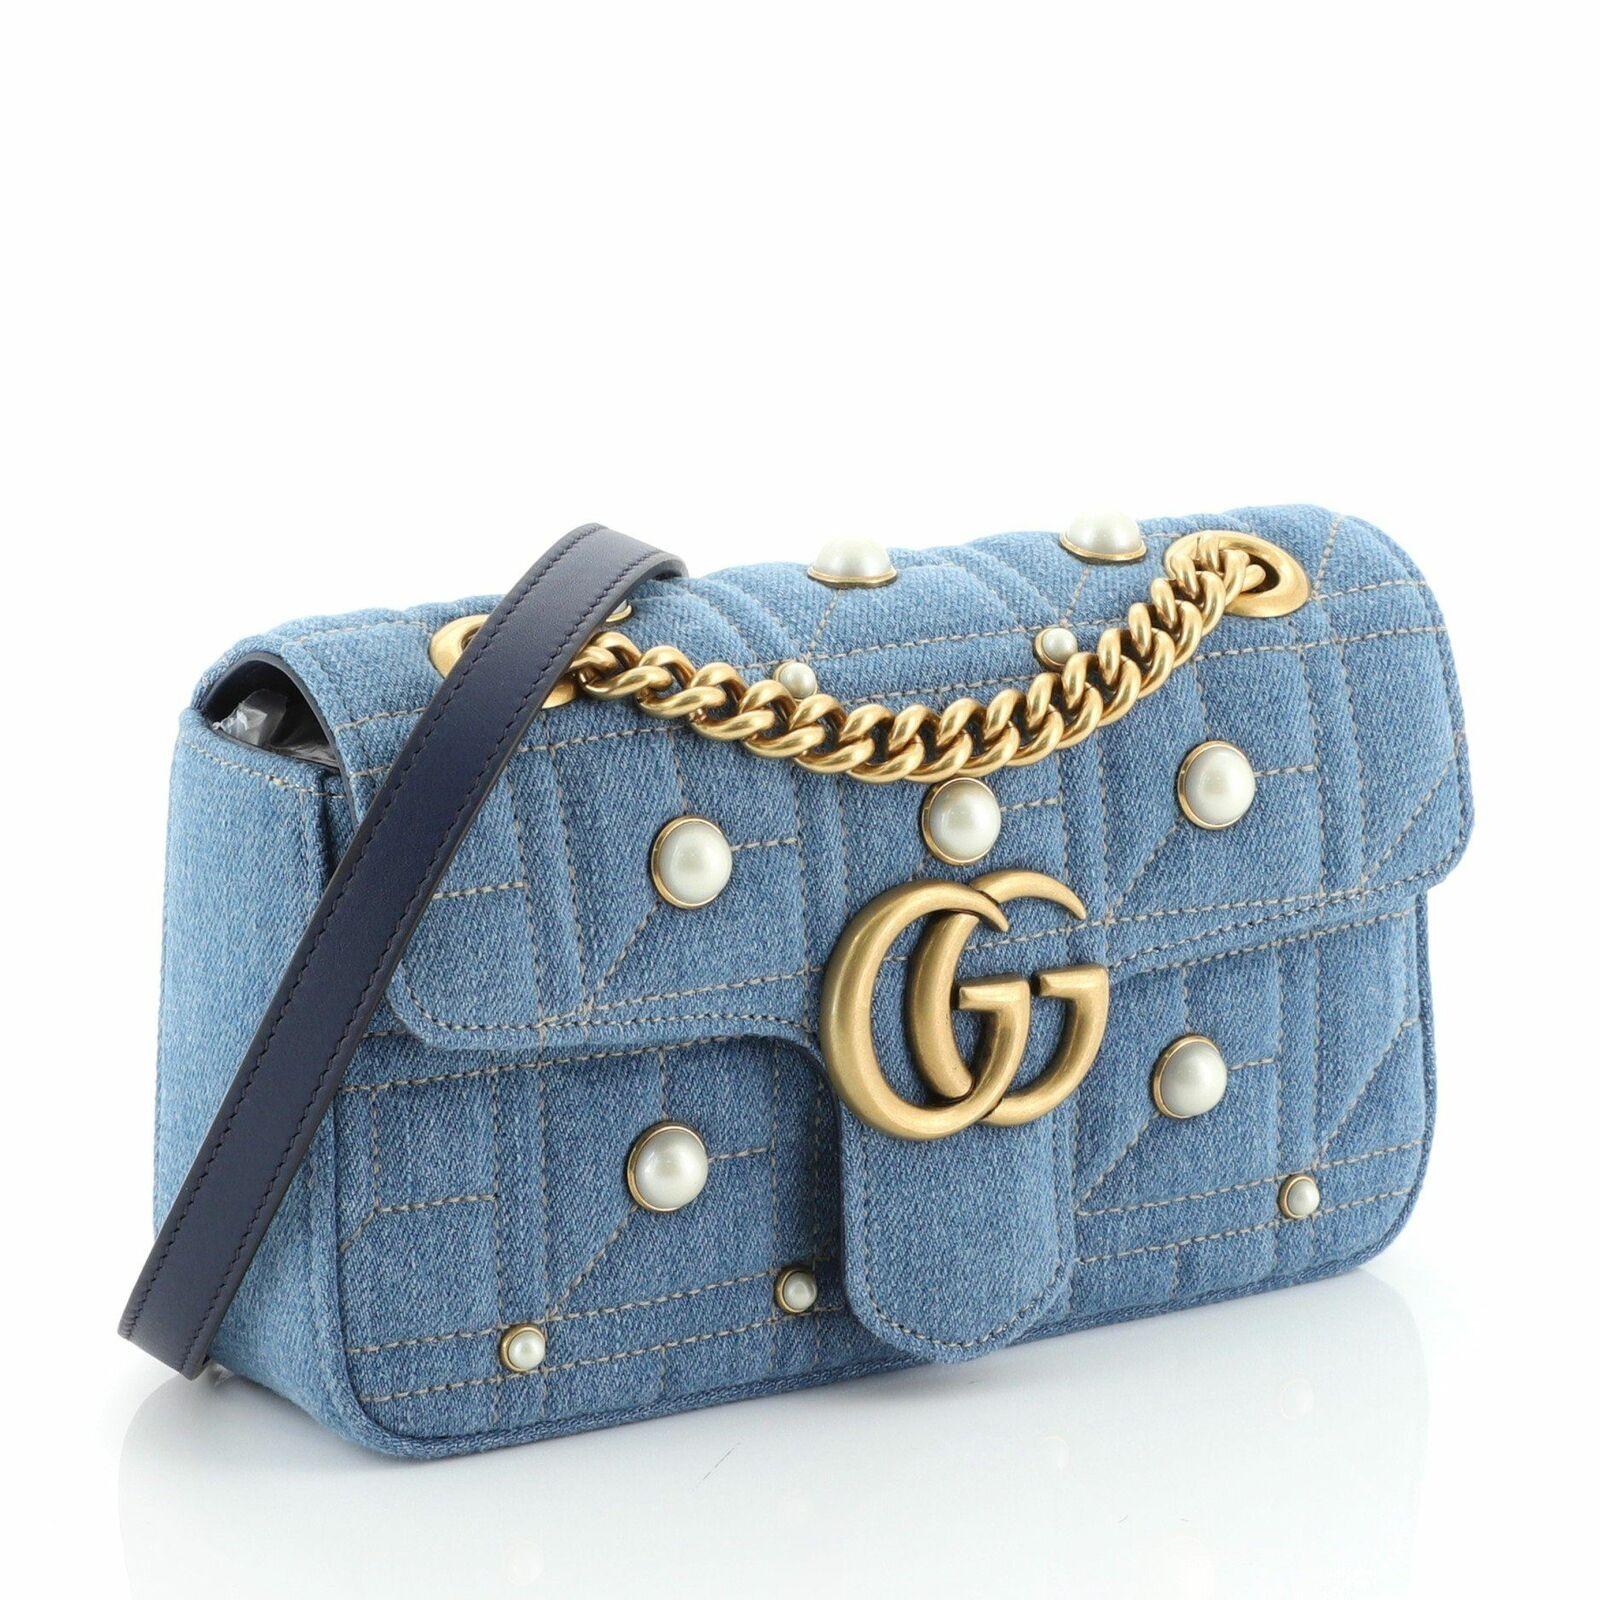 Gucci Gg Marmont 2.0 Imitation Pearl Embellished Denim Crossbody Bag in Light Blue (Blue) - Lyst